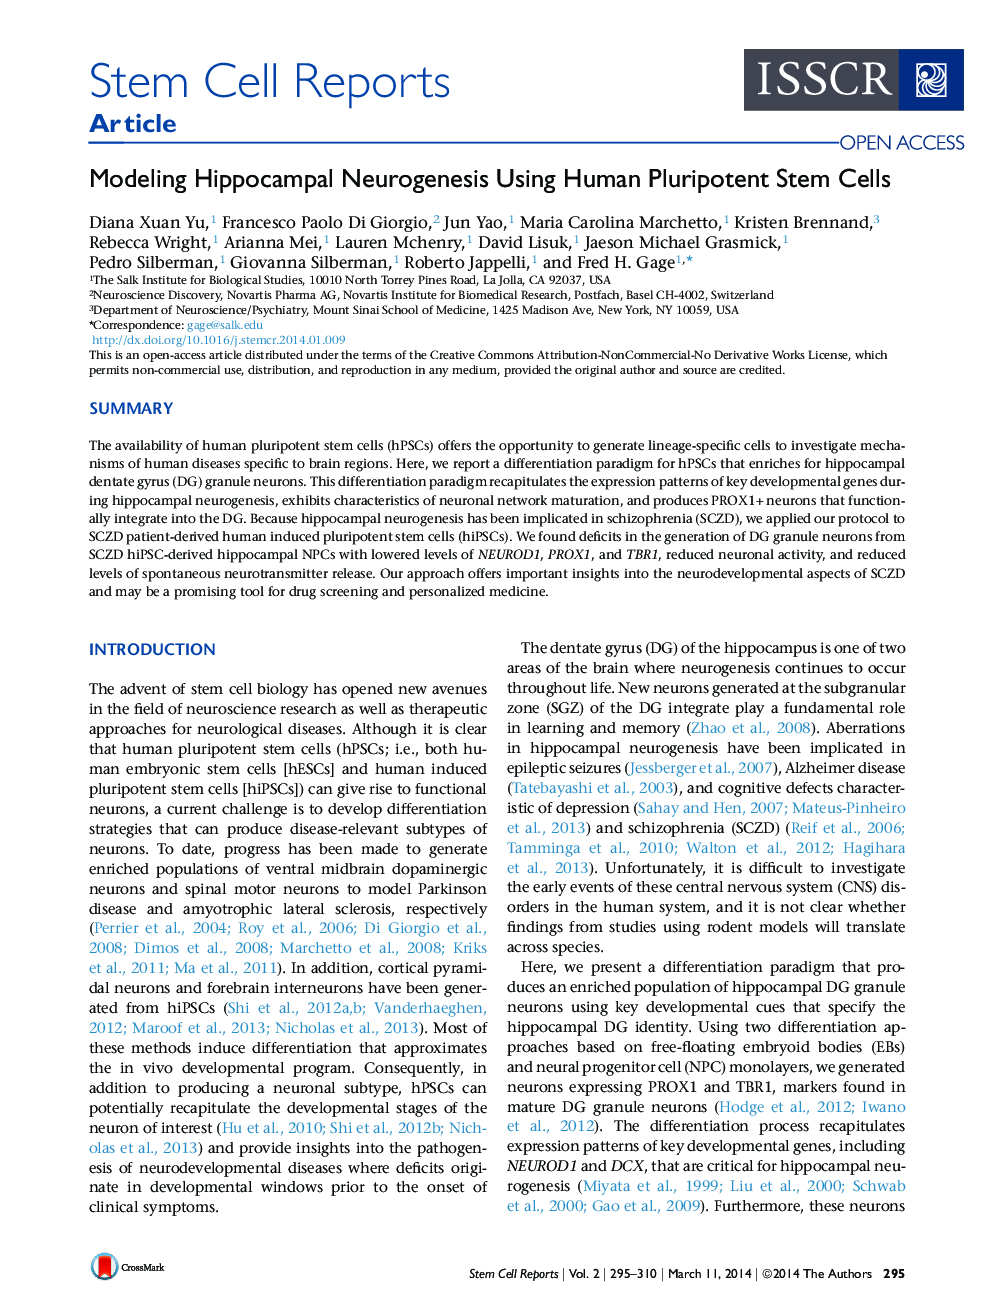 Modeling Hippocampal Neurogenesis Using Human Pluripotent Stem Cells 